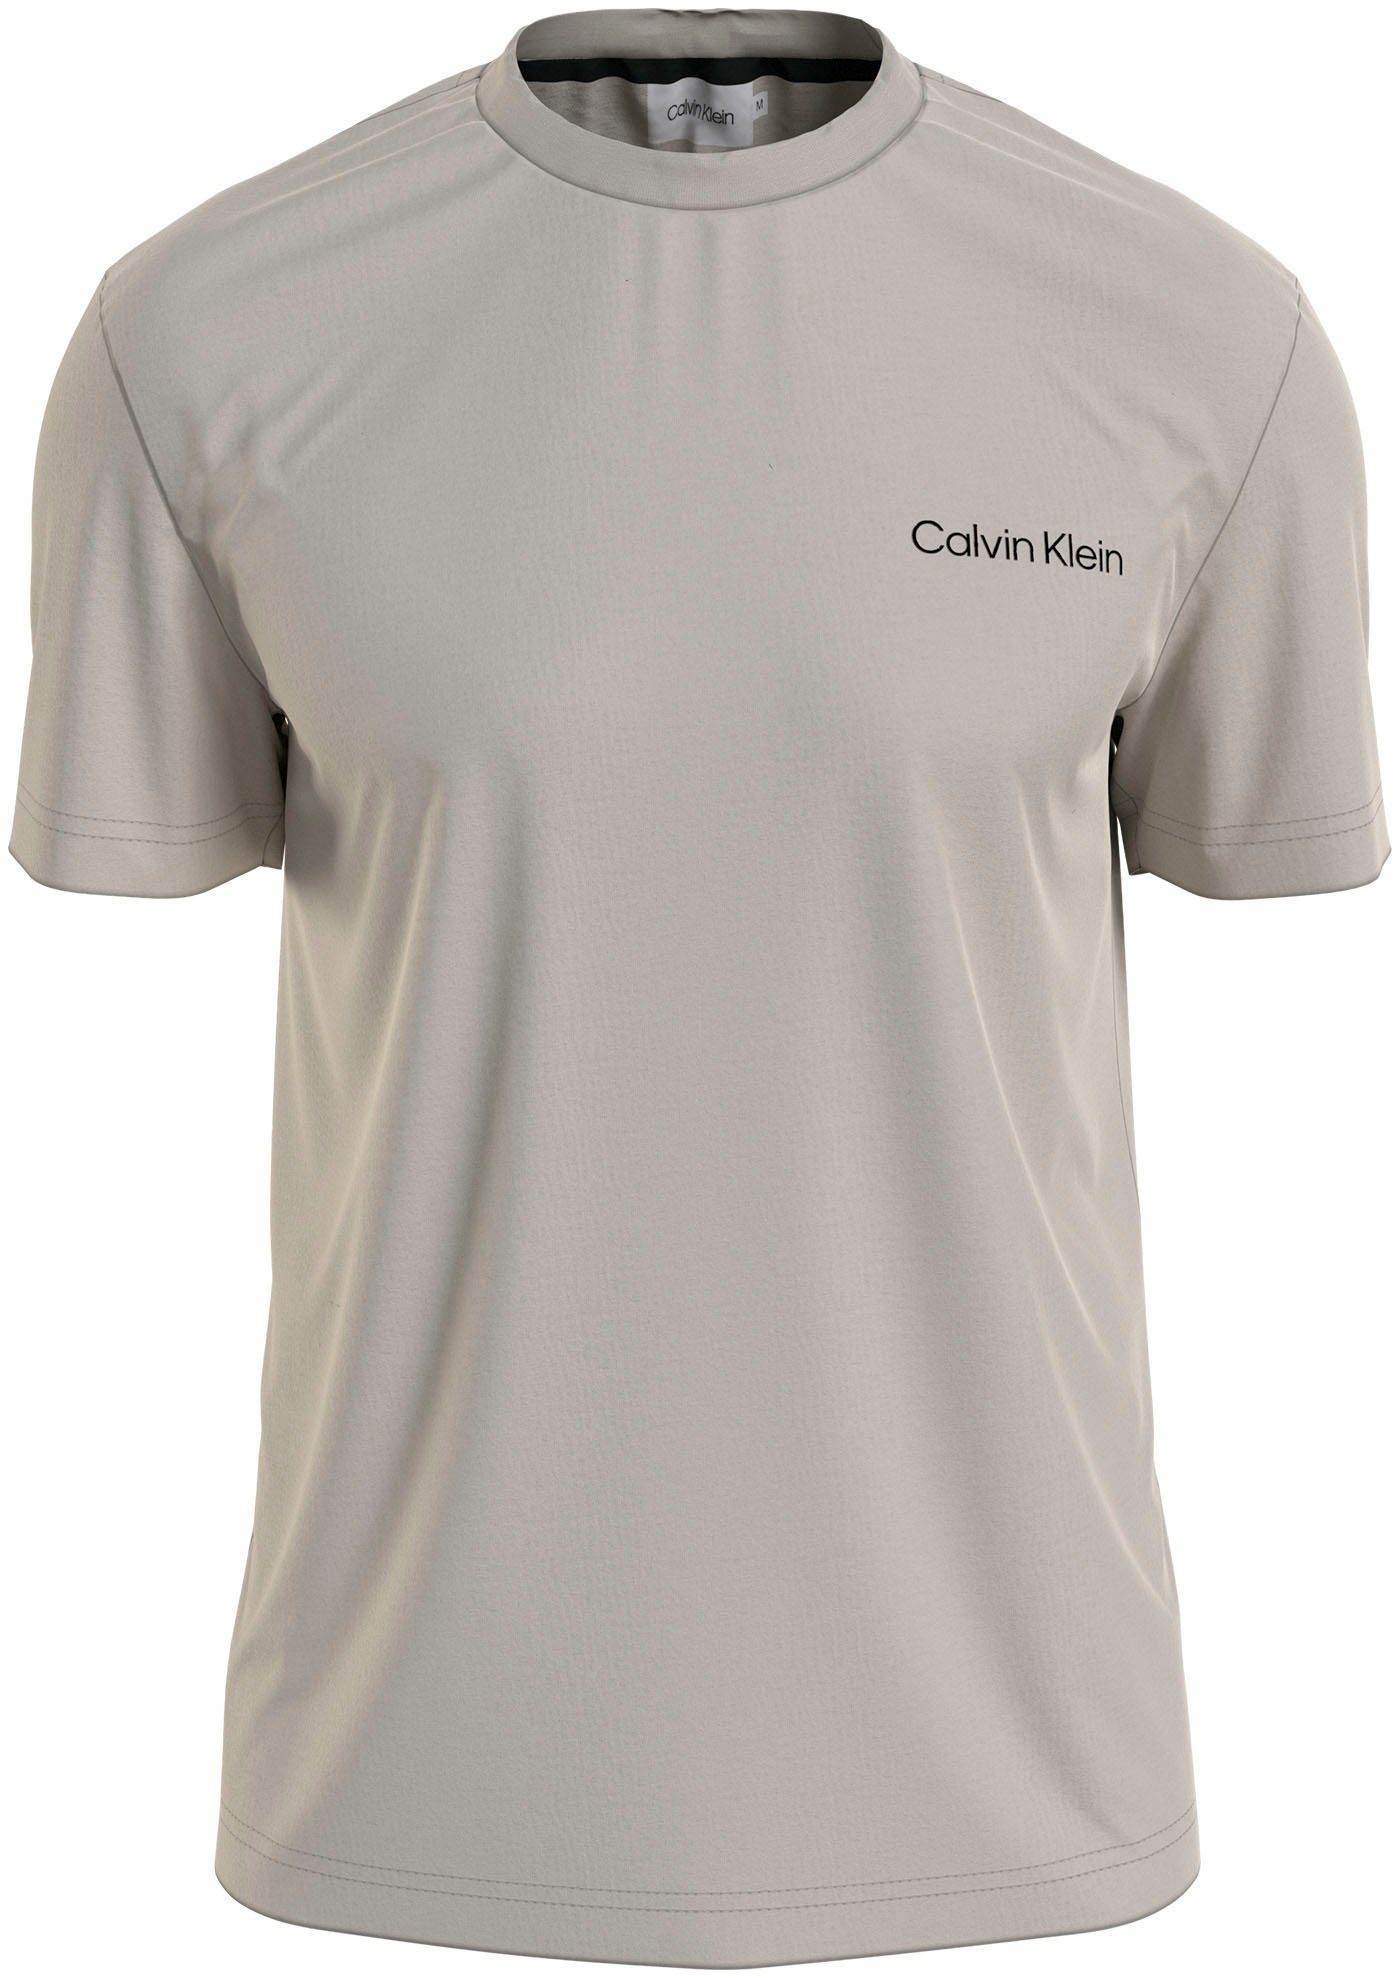 Calvin Klein T-Shirt ANGLED BACK LOGO T-SHIRT